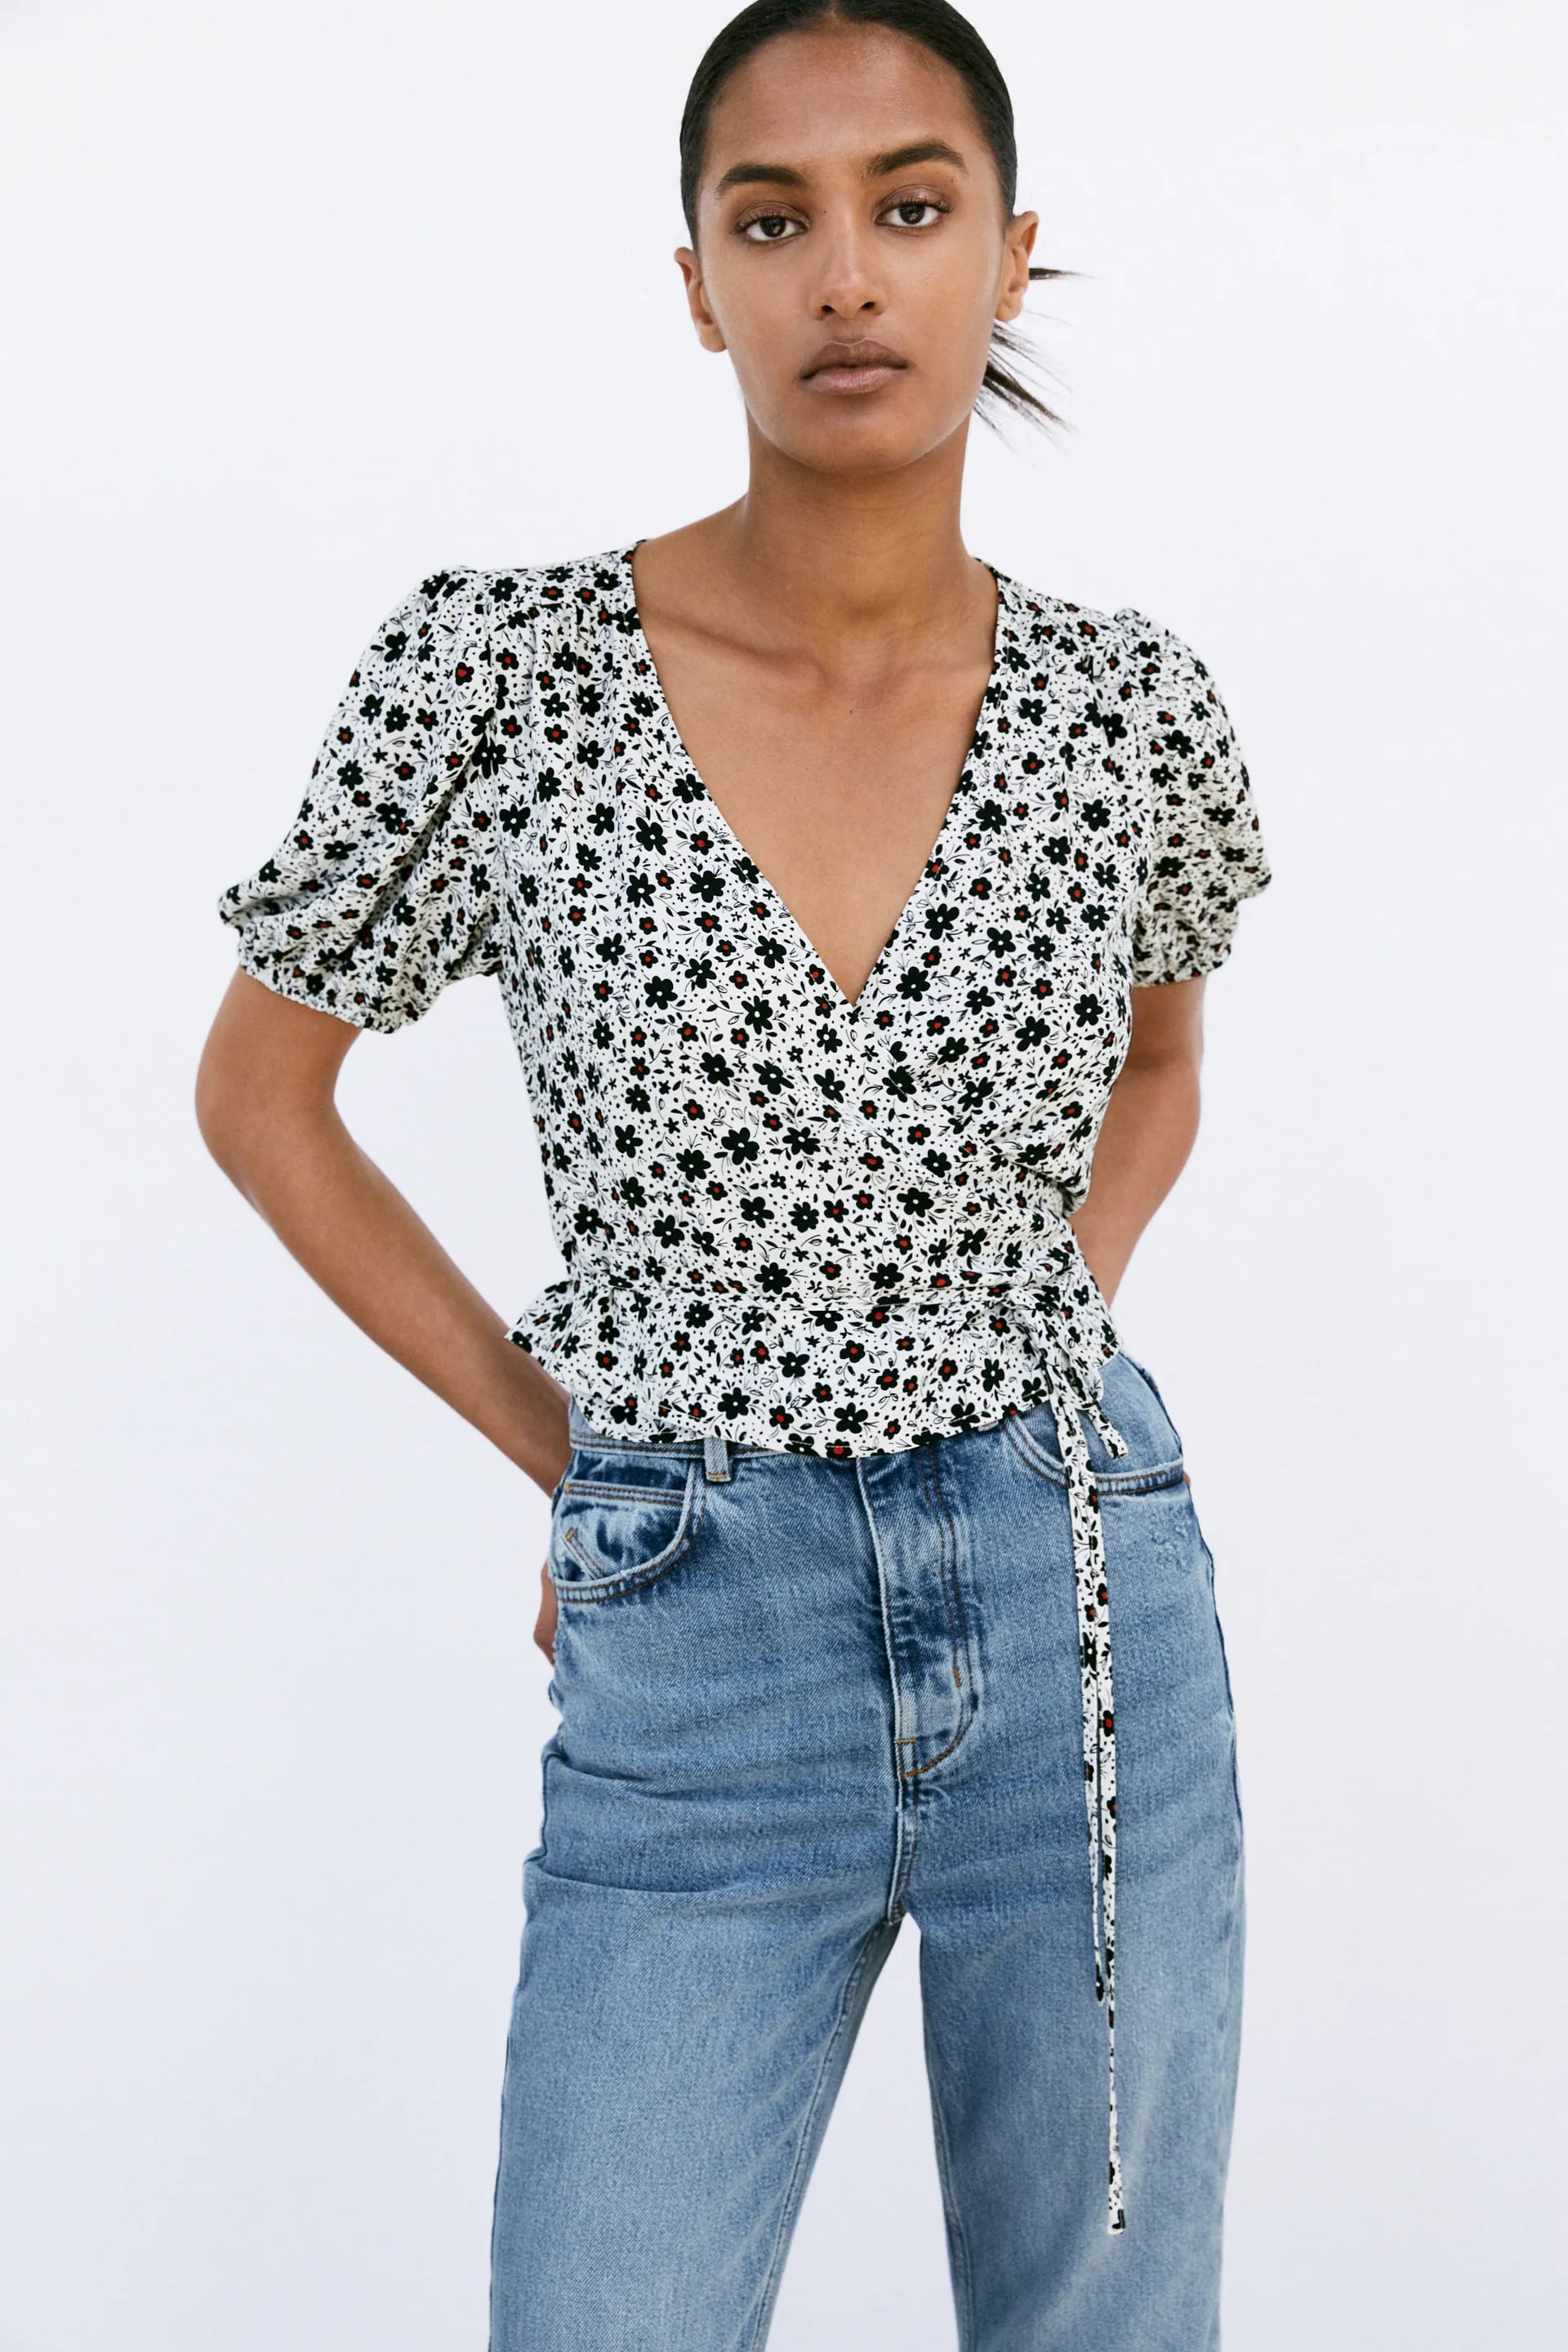 ZARA polka dot shirt/blouse (used once), Women's Fashion, Tops